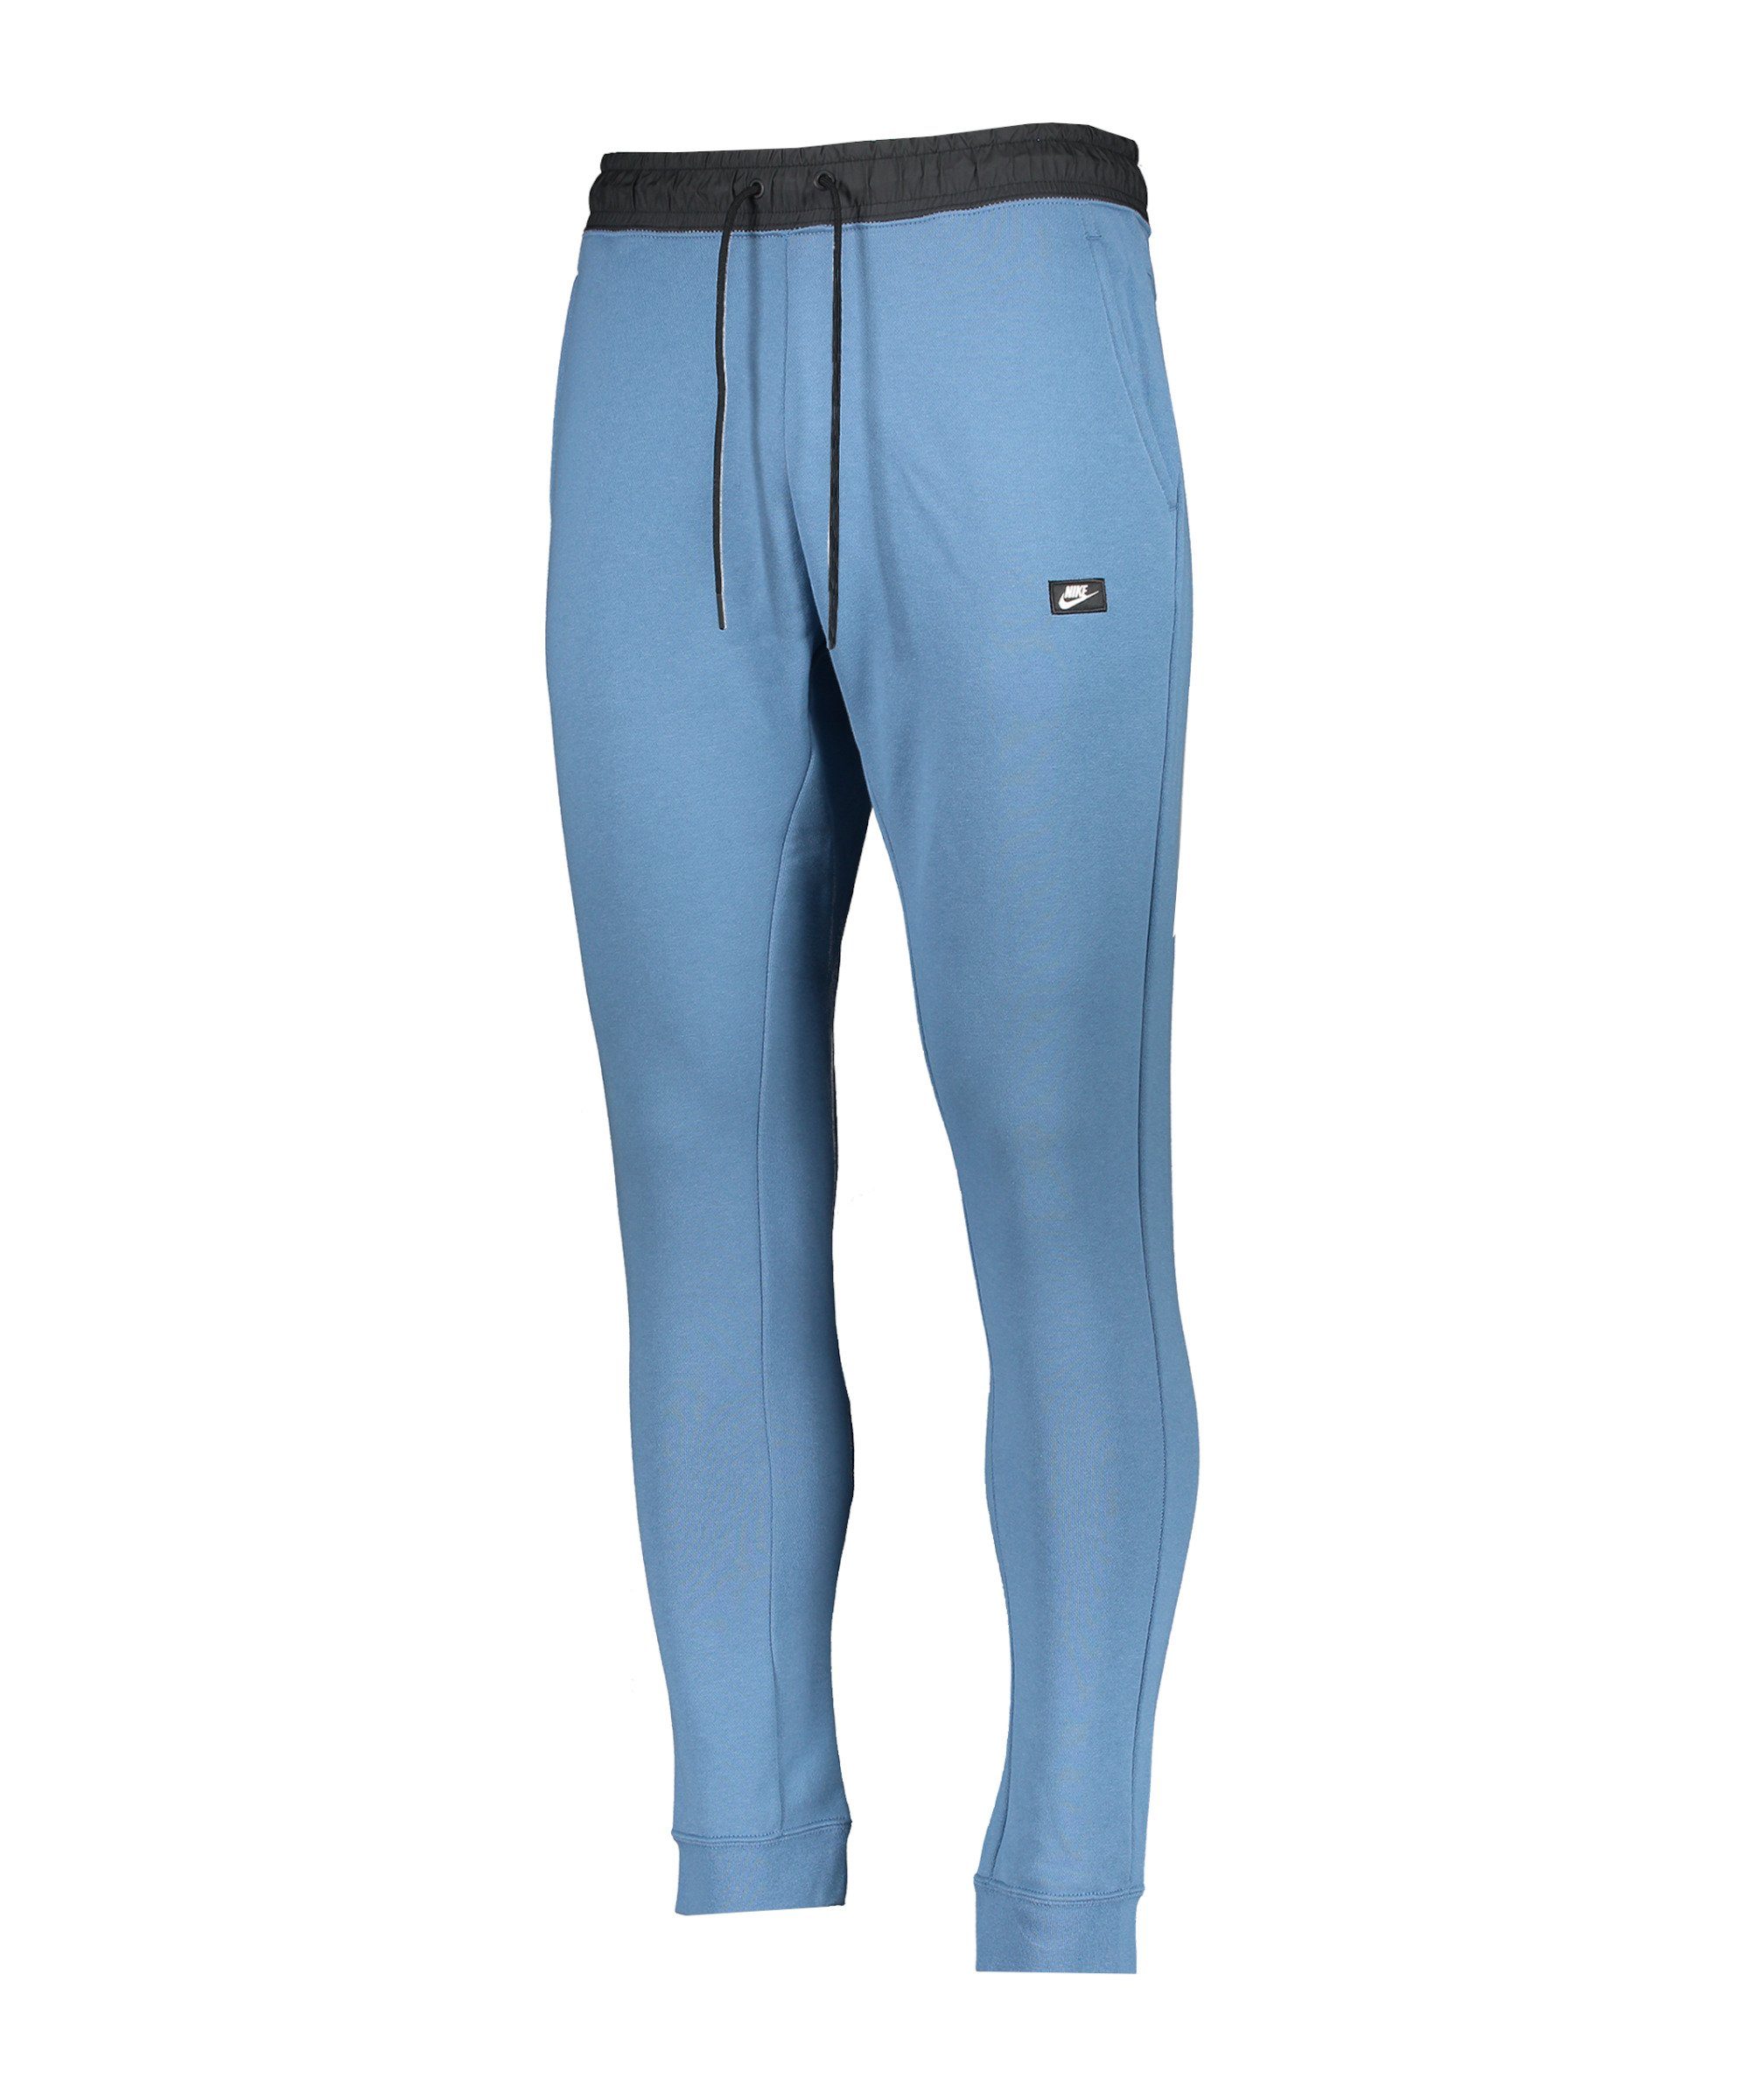 Jogger Nike Modern Sportswear Hose Pant Jogginghose lang